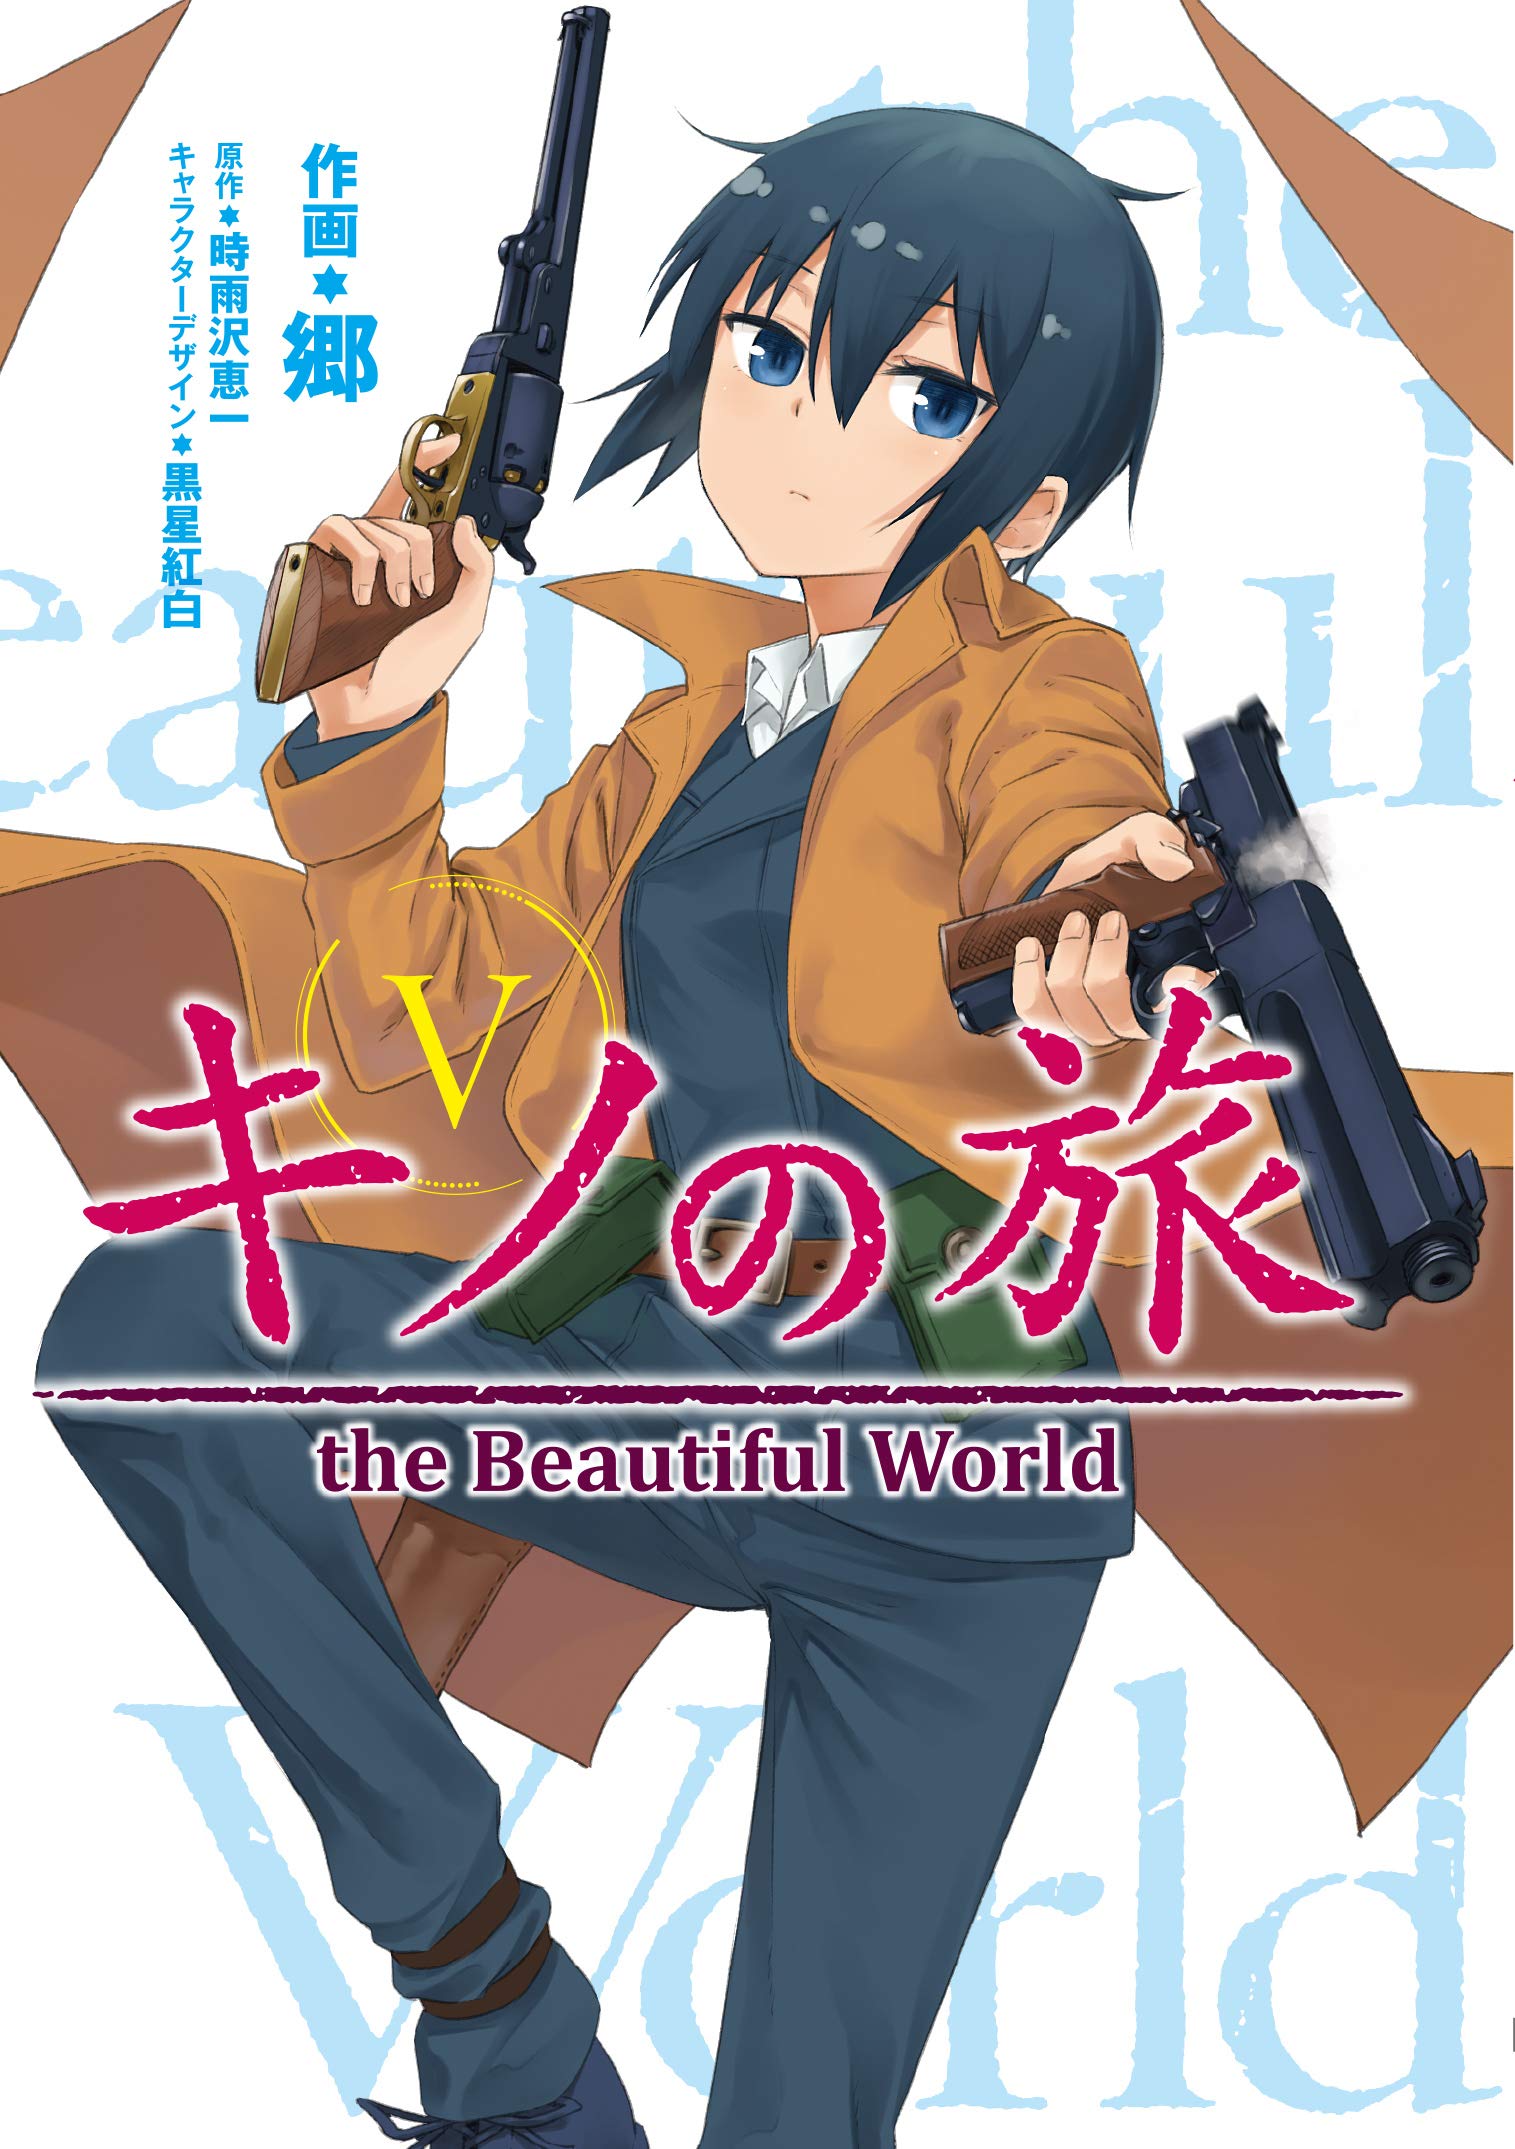 JAPAN novel: Kino's Journey / Kino no Tabi the Beautiful World 1